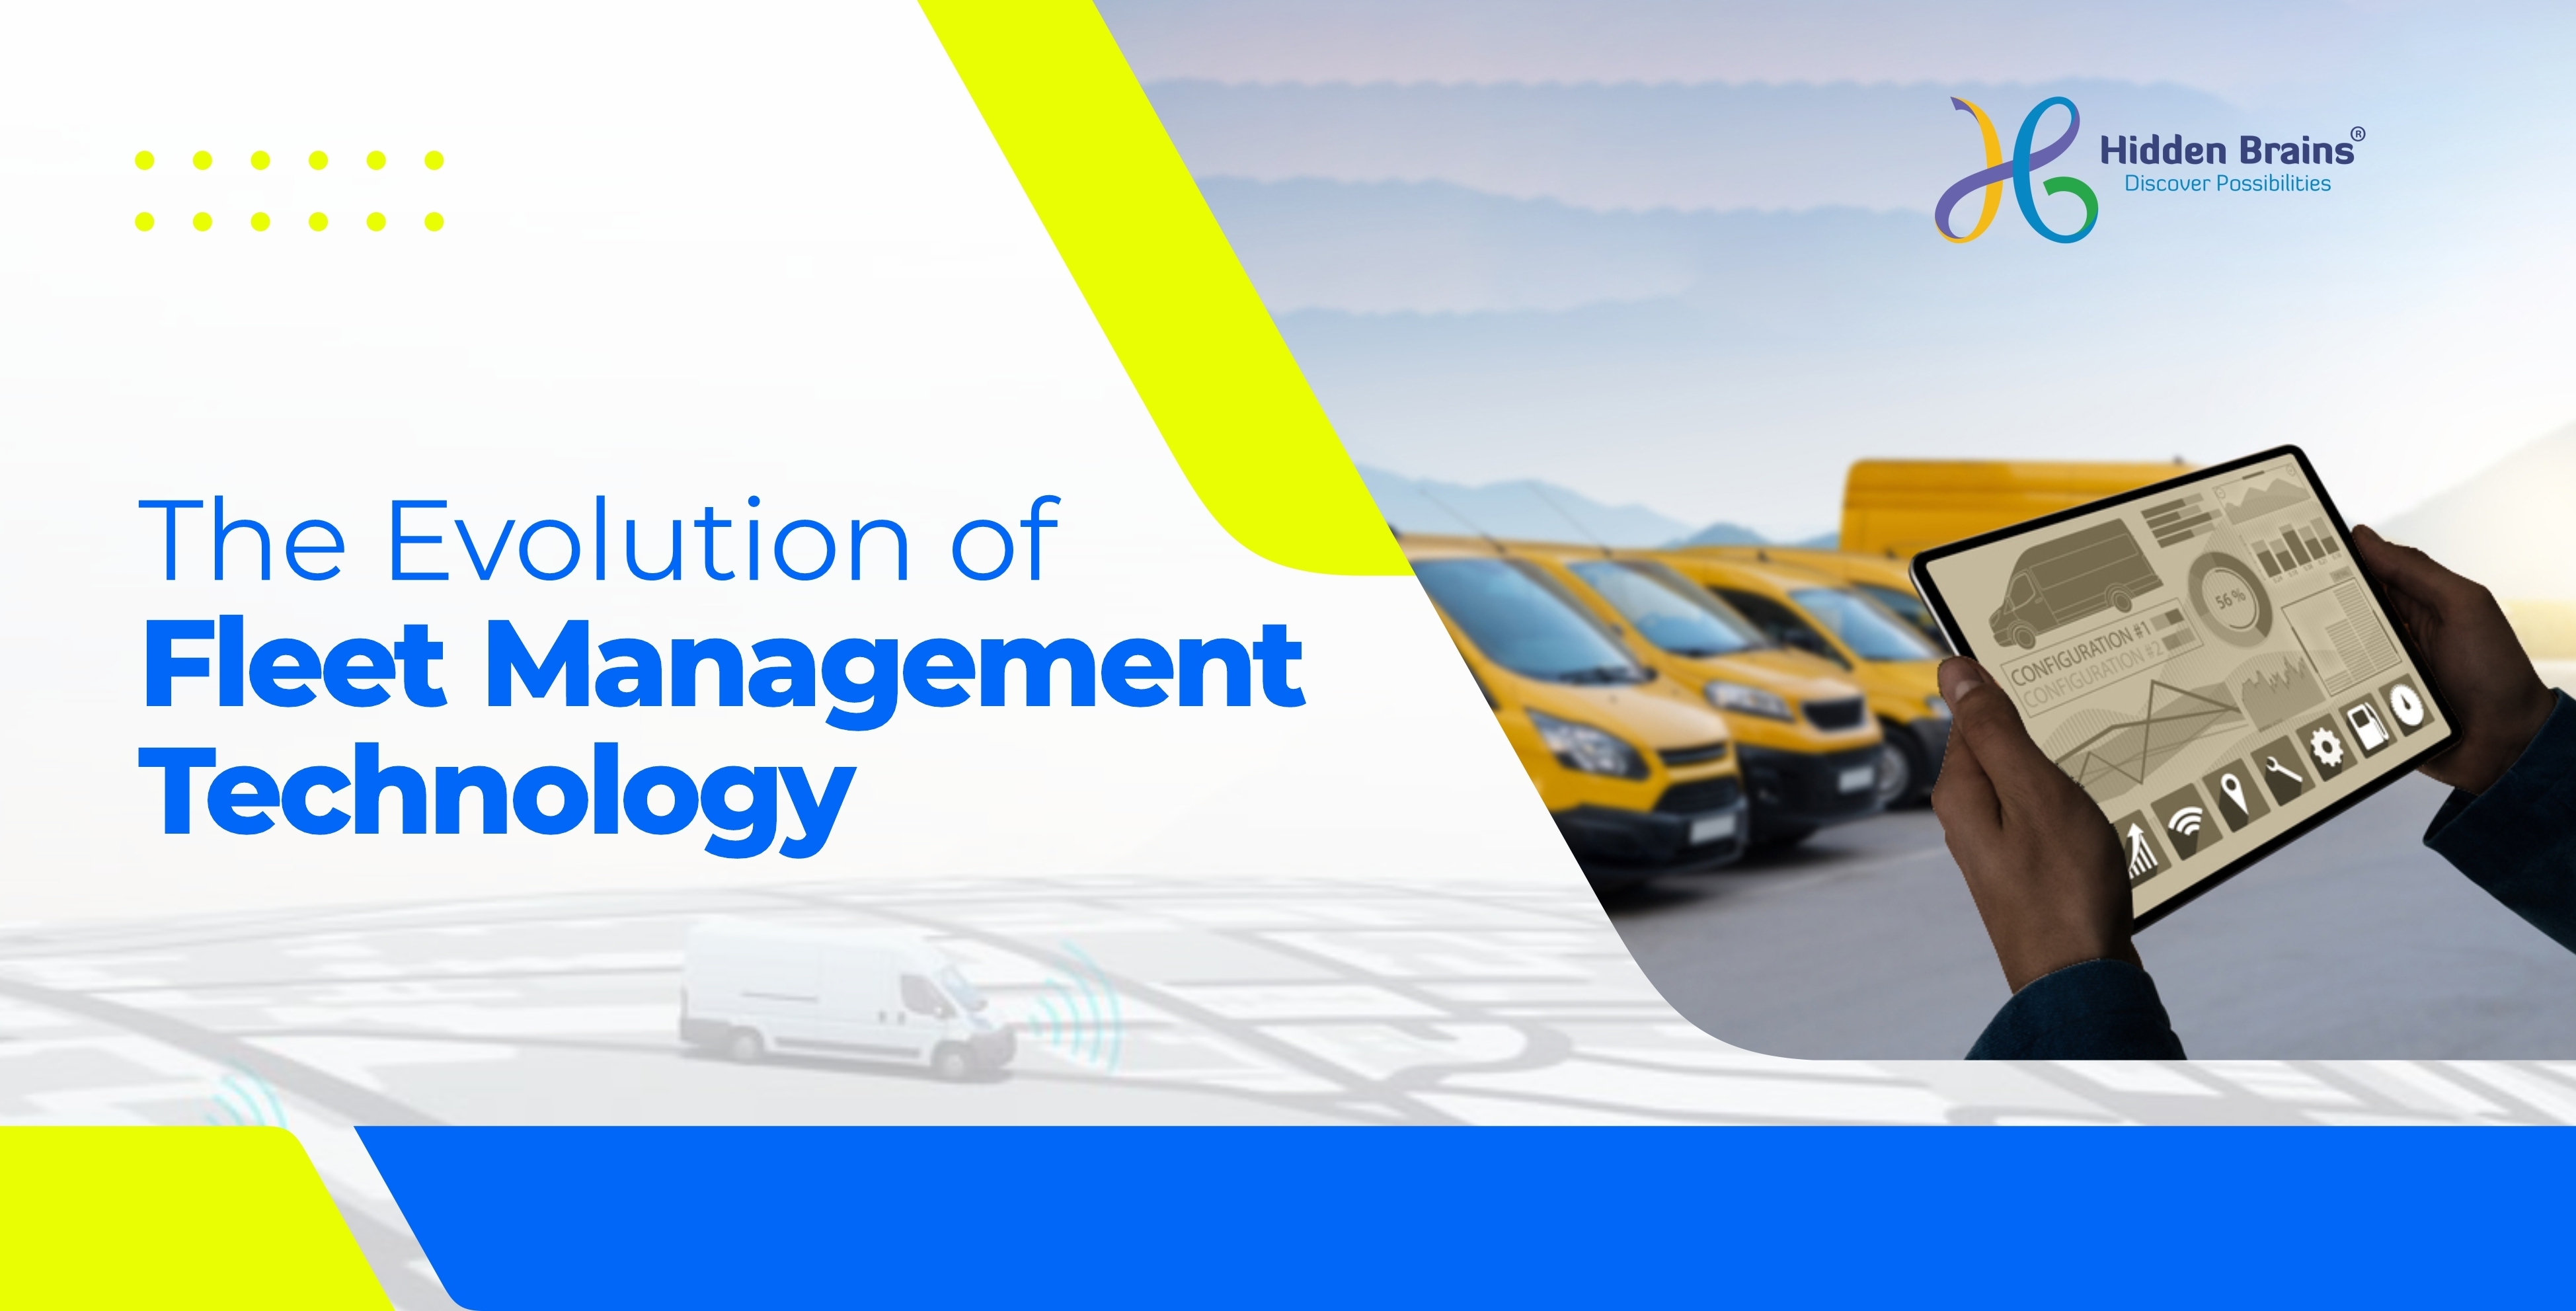 The Evolution of Fleet Management Technology